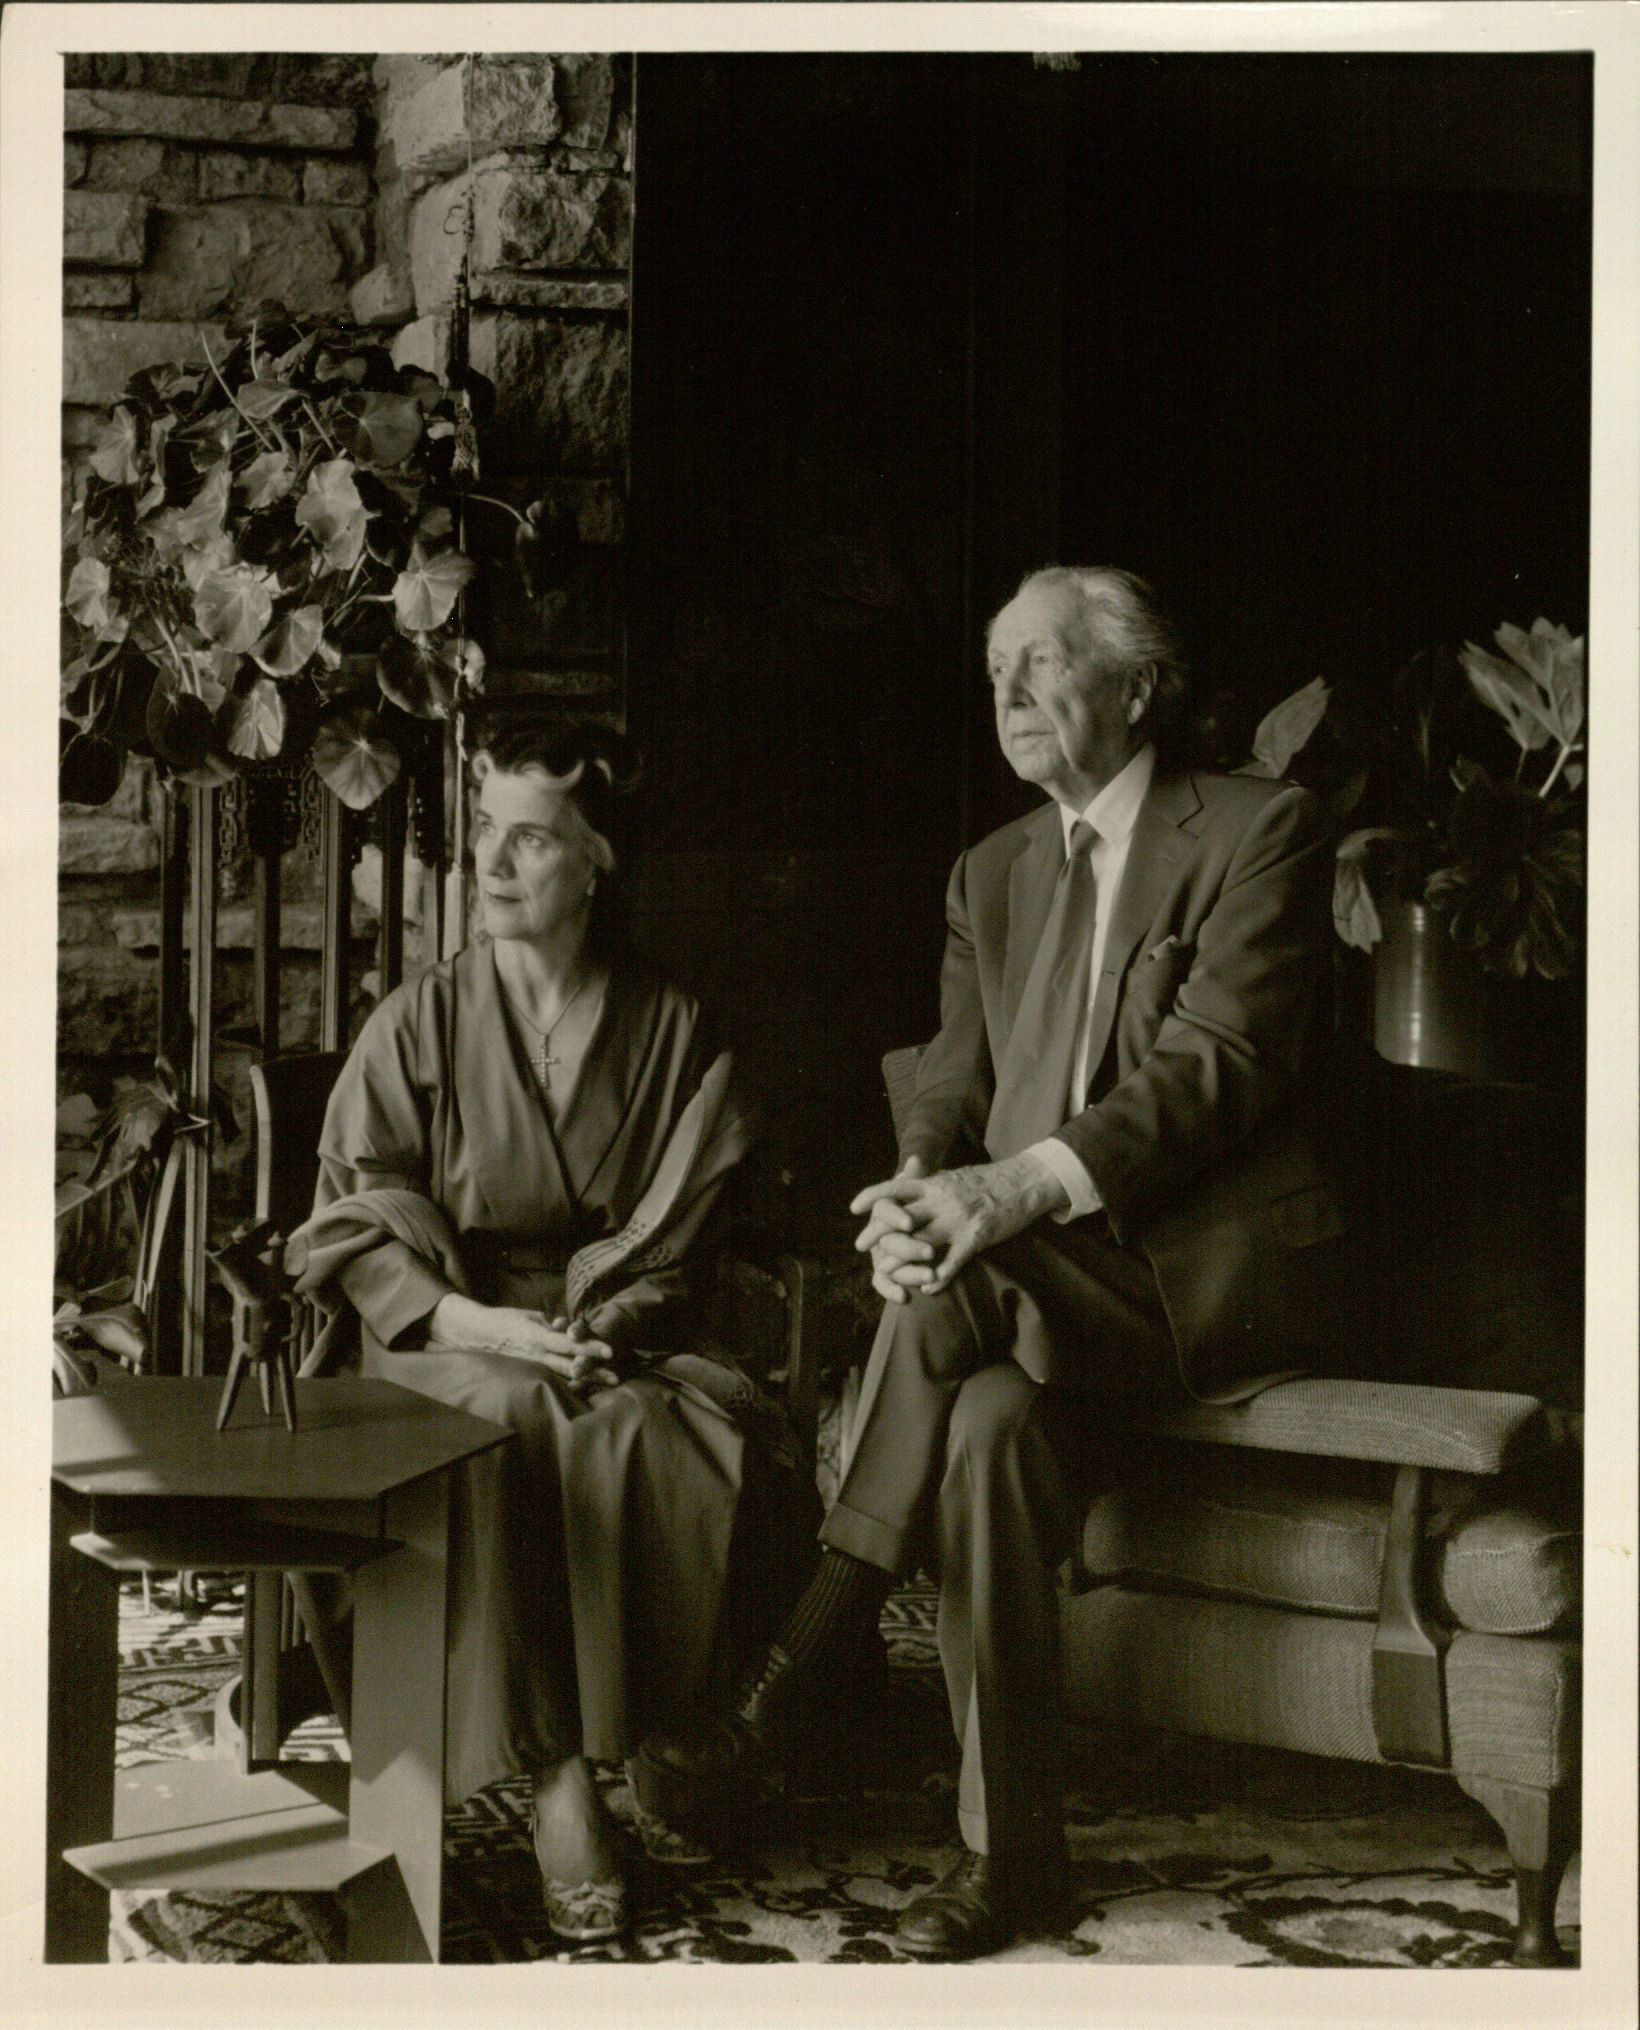 Photograph of Olgivanna and Frank Lloyd Wright.